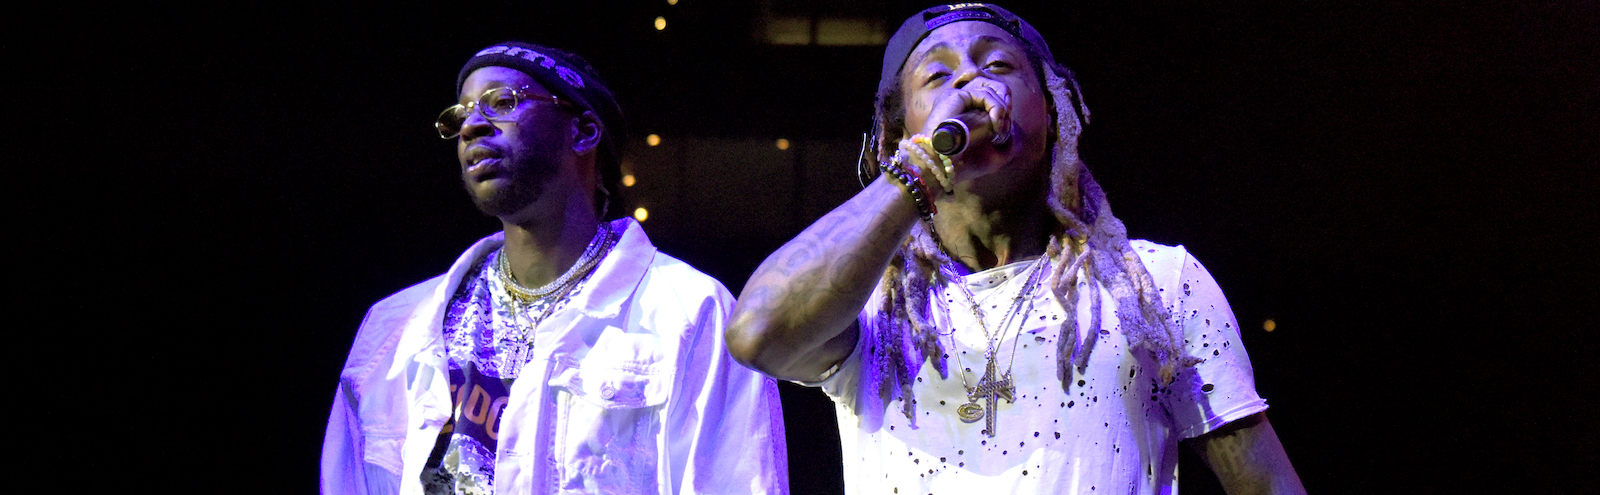 2 Chainz Lil Wayne 2016 Collegrove Tour